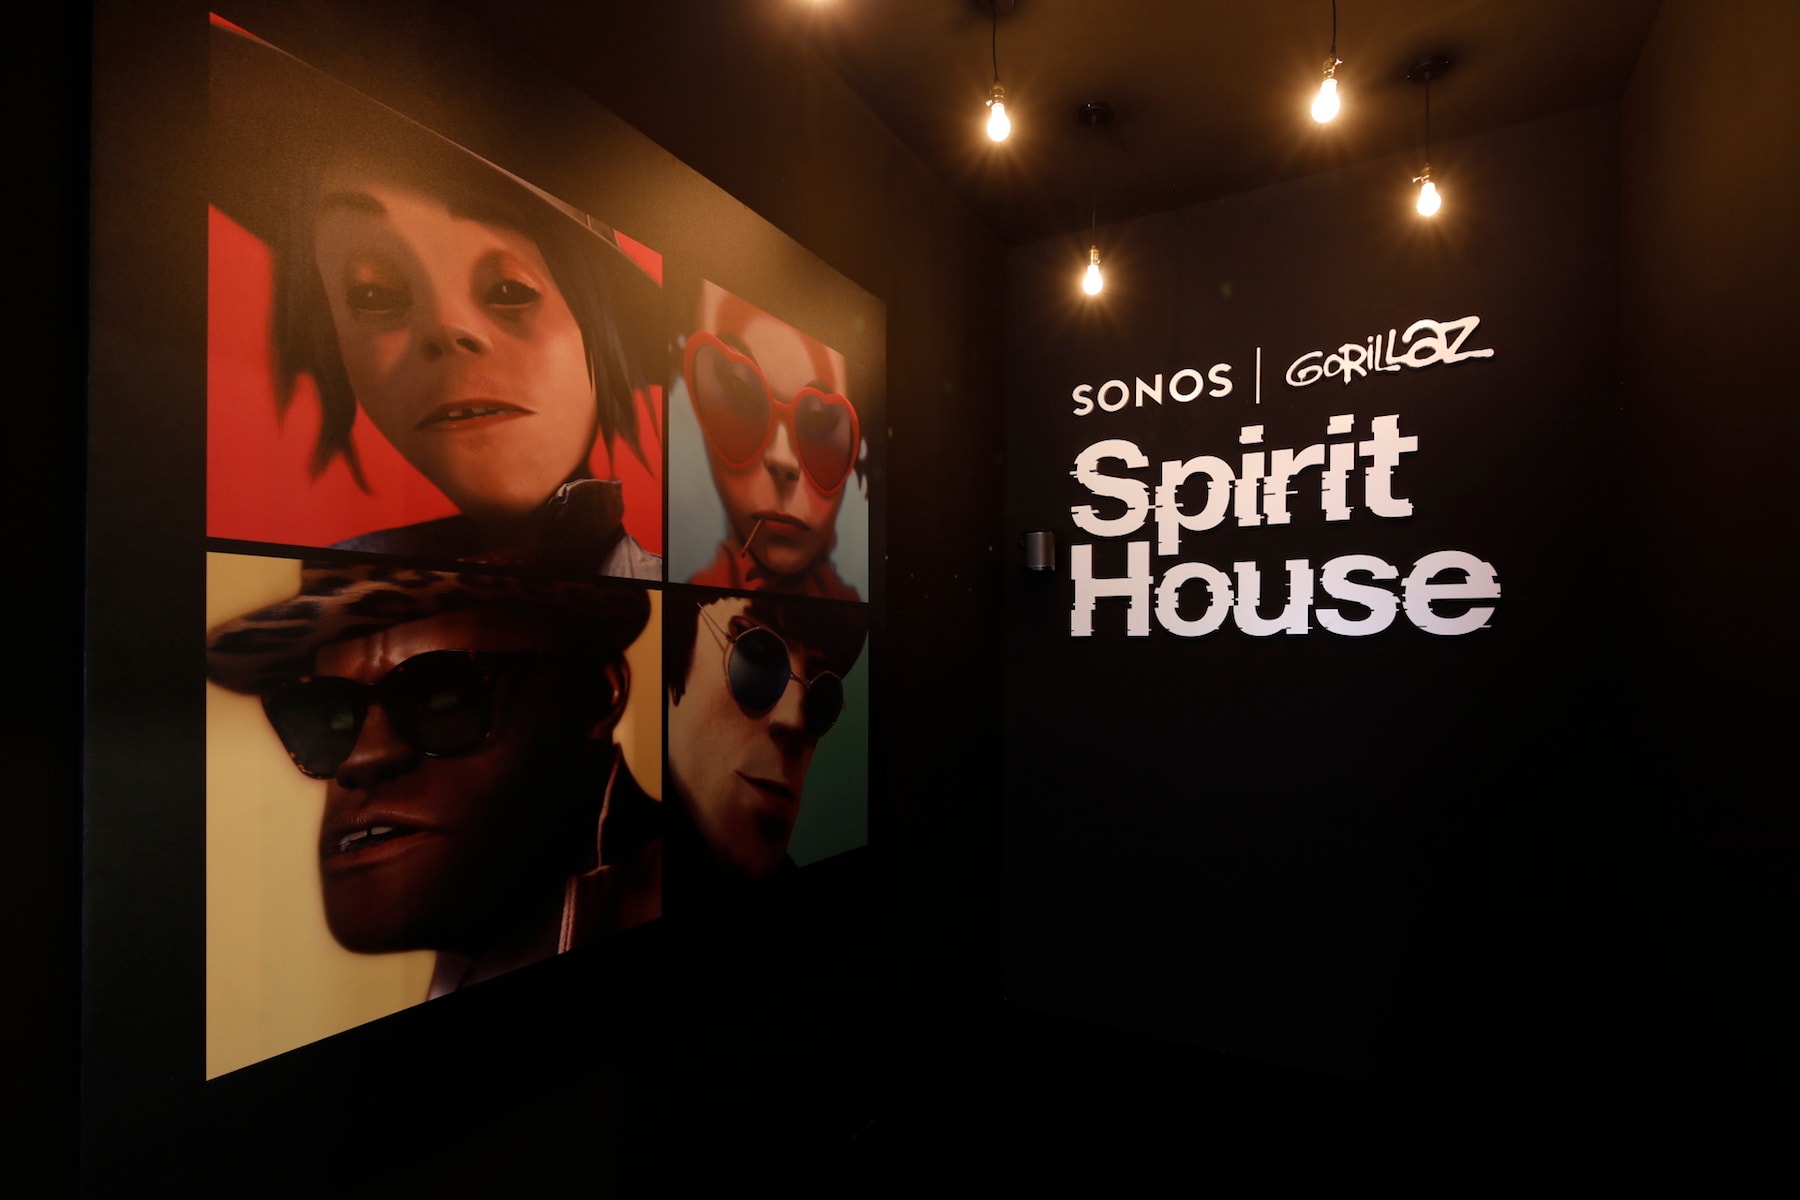 Sonos Gorillaz “Spirit House” Shanghai